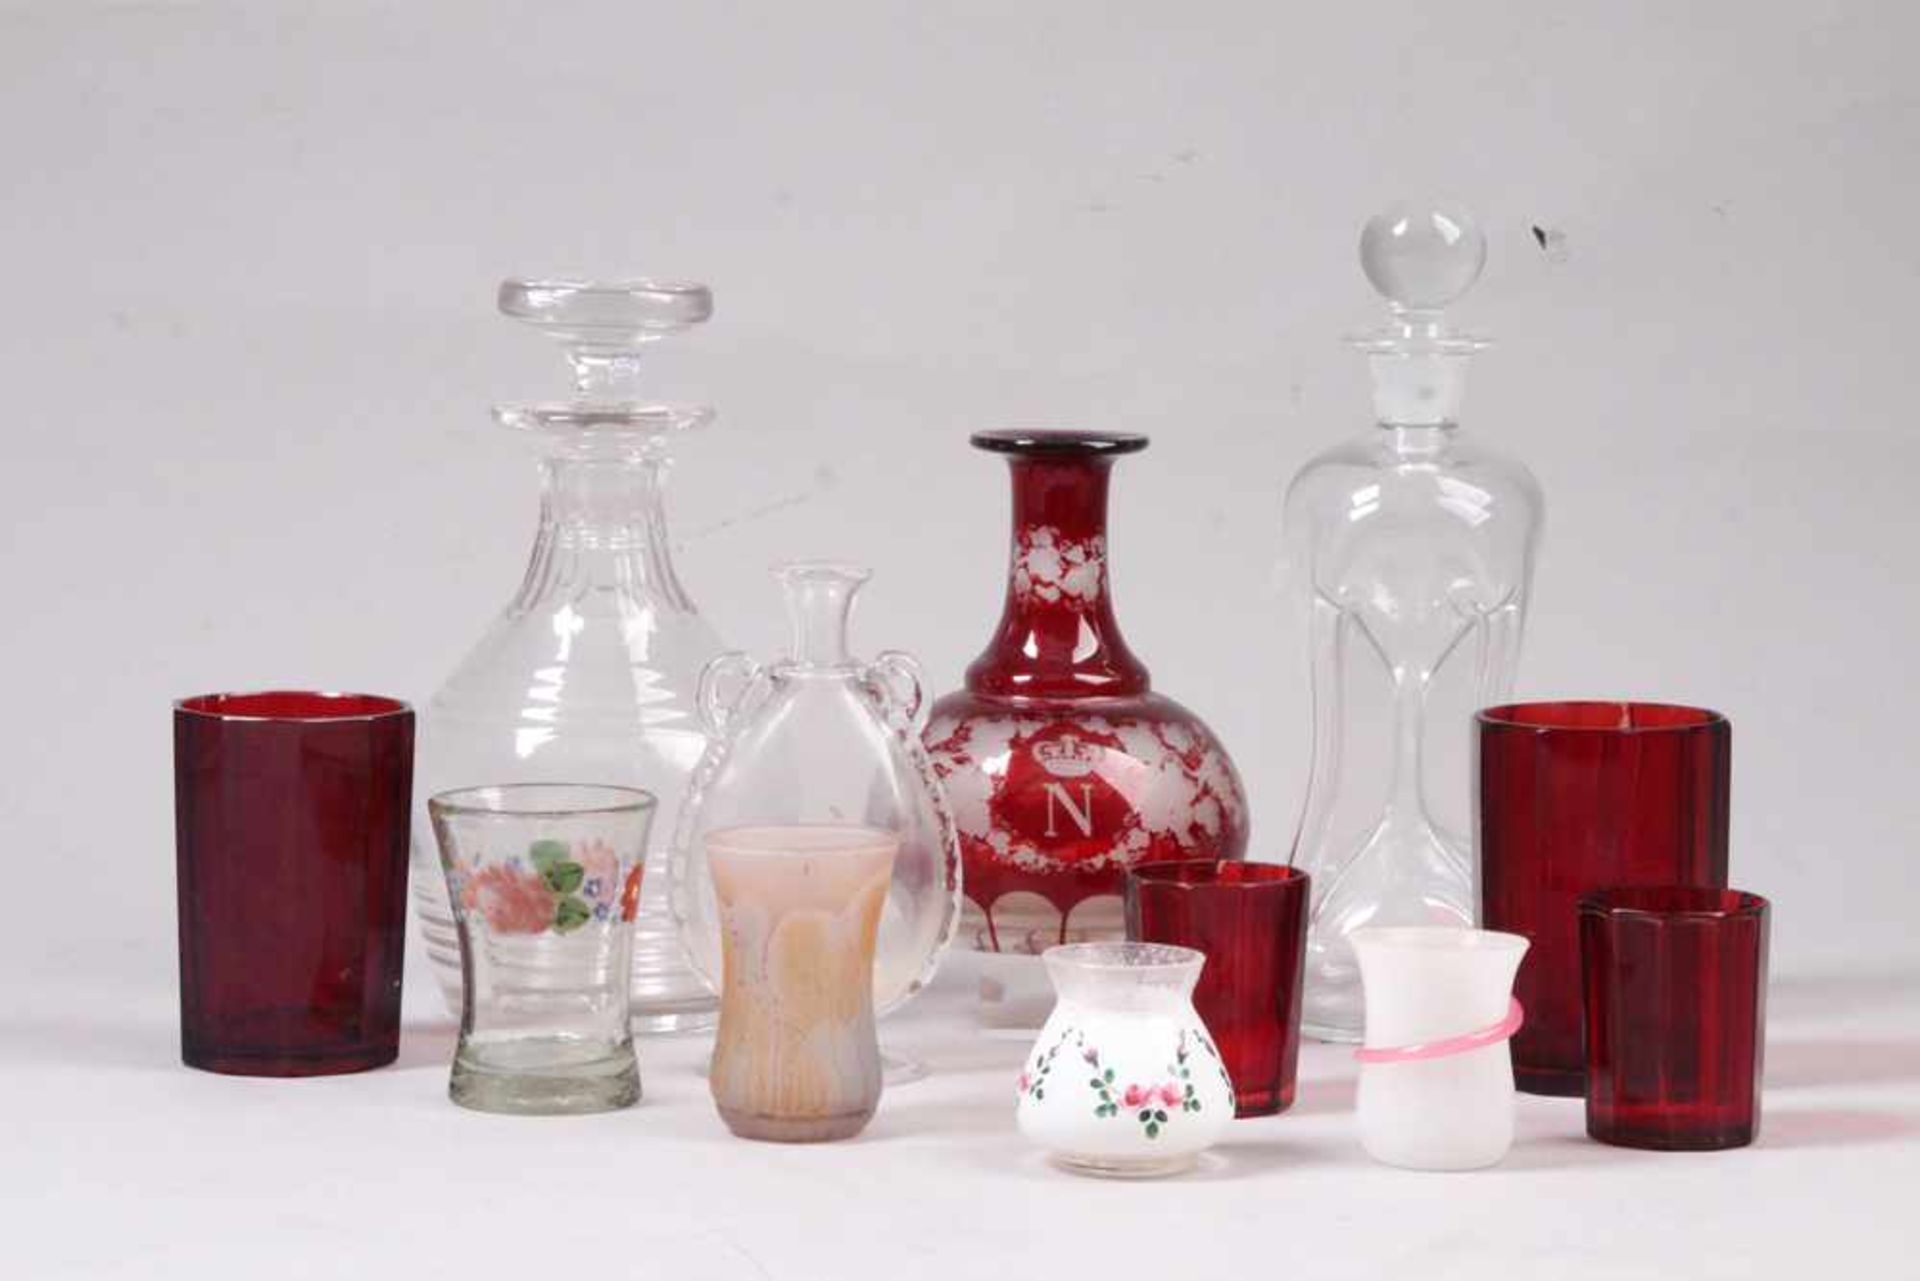 Konvolut.Böhmen, 19. Jh. Farbloses, mundgeblasenes Glas, teils rot lasiert bzw. farbig dekoriert.